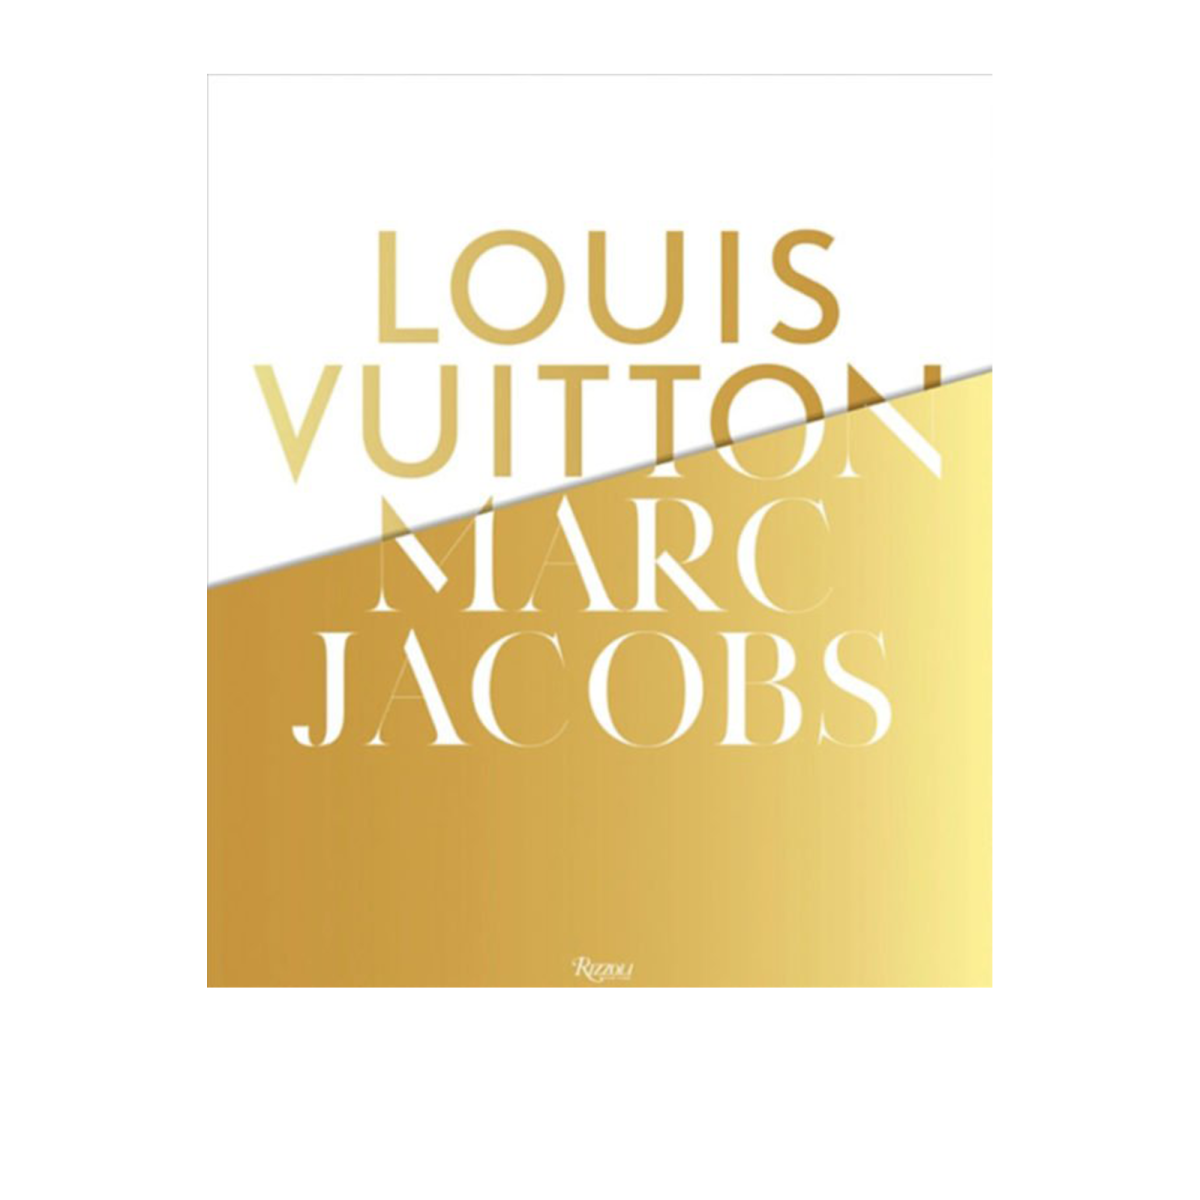 Coffeetable book - Louis Vuitton -Catwalk